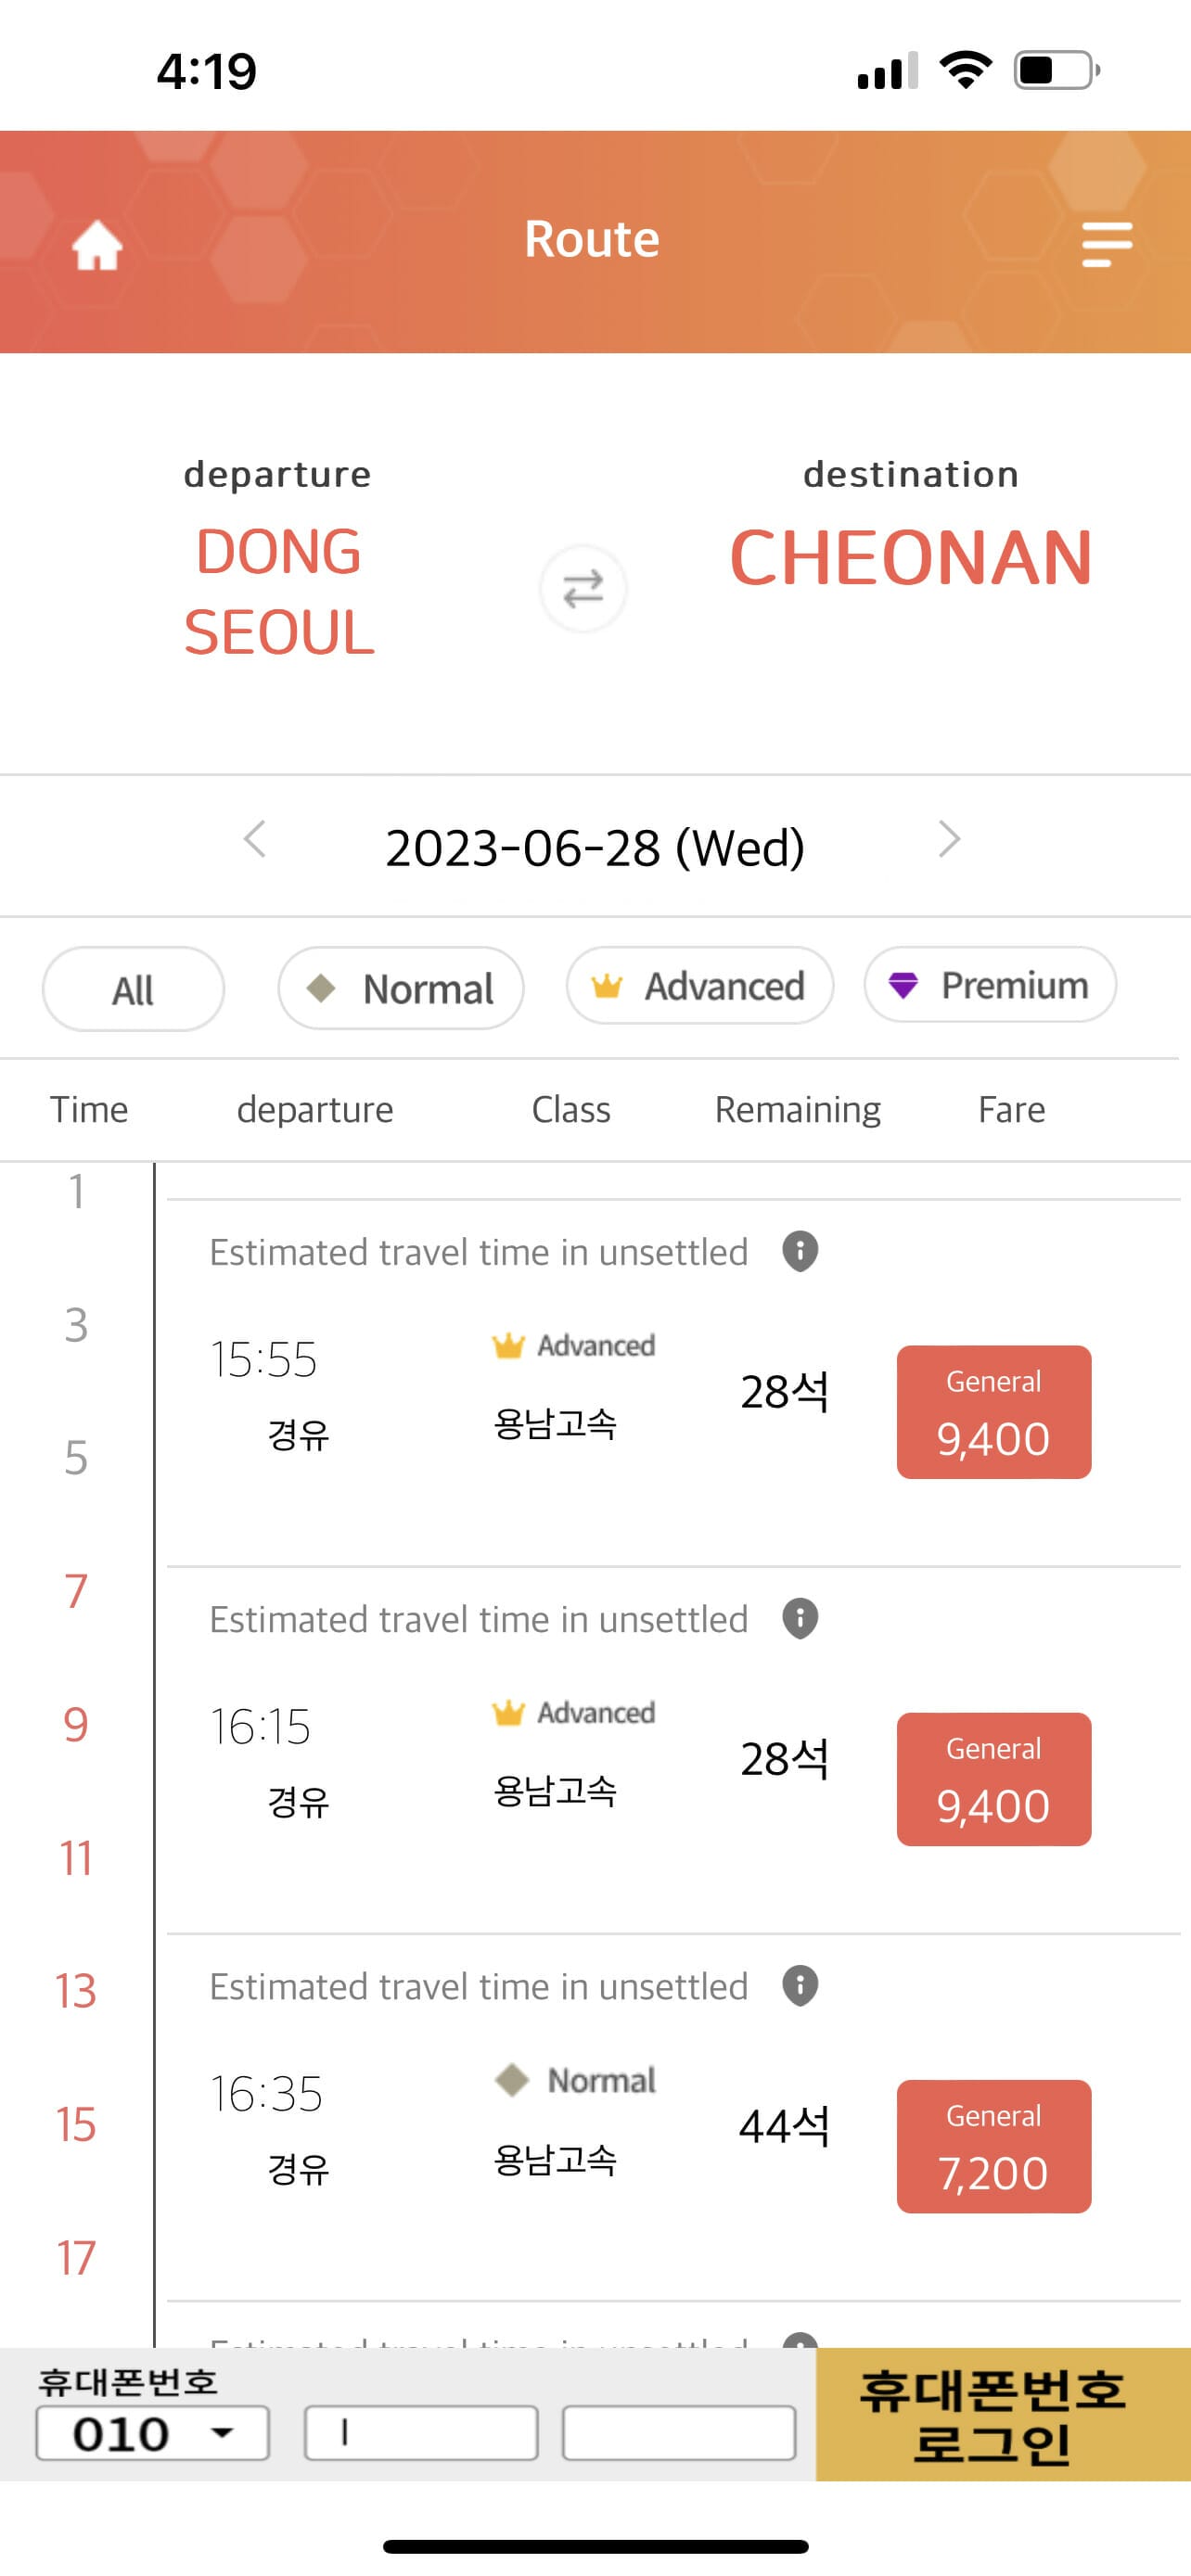 13 Best Korean Travel Apps - Prepare for Your Korea Trip 19